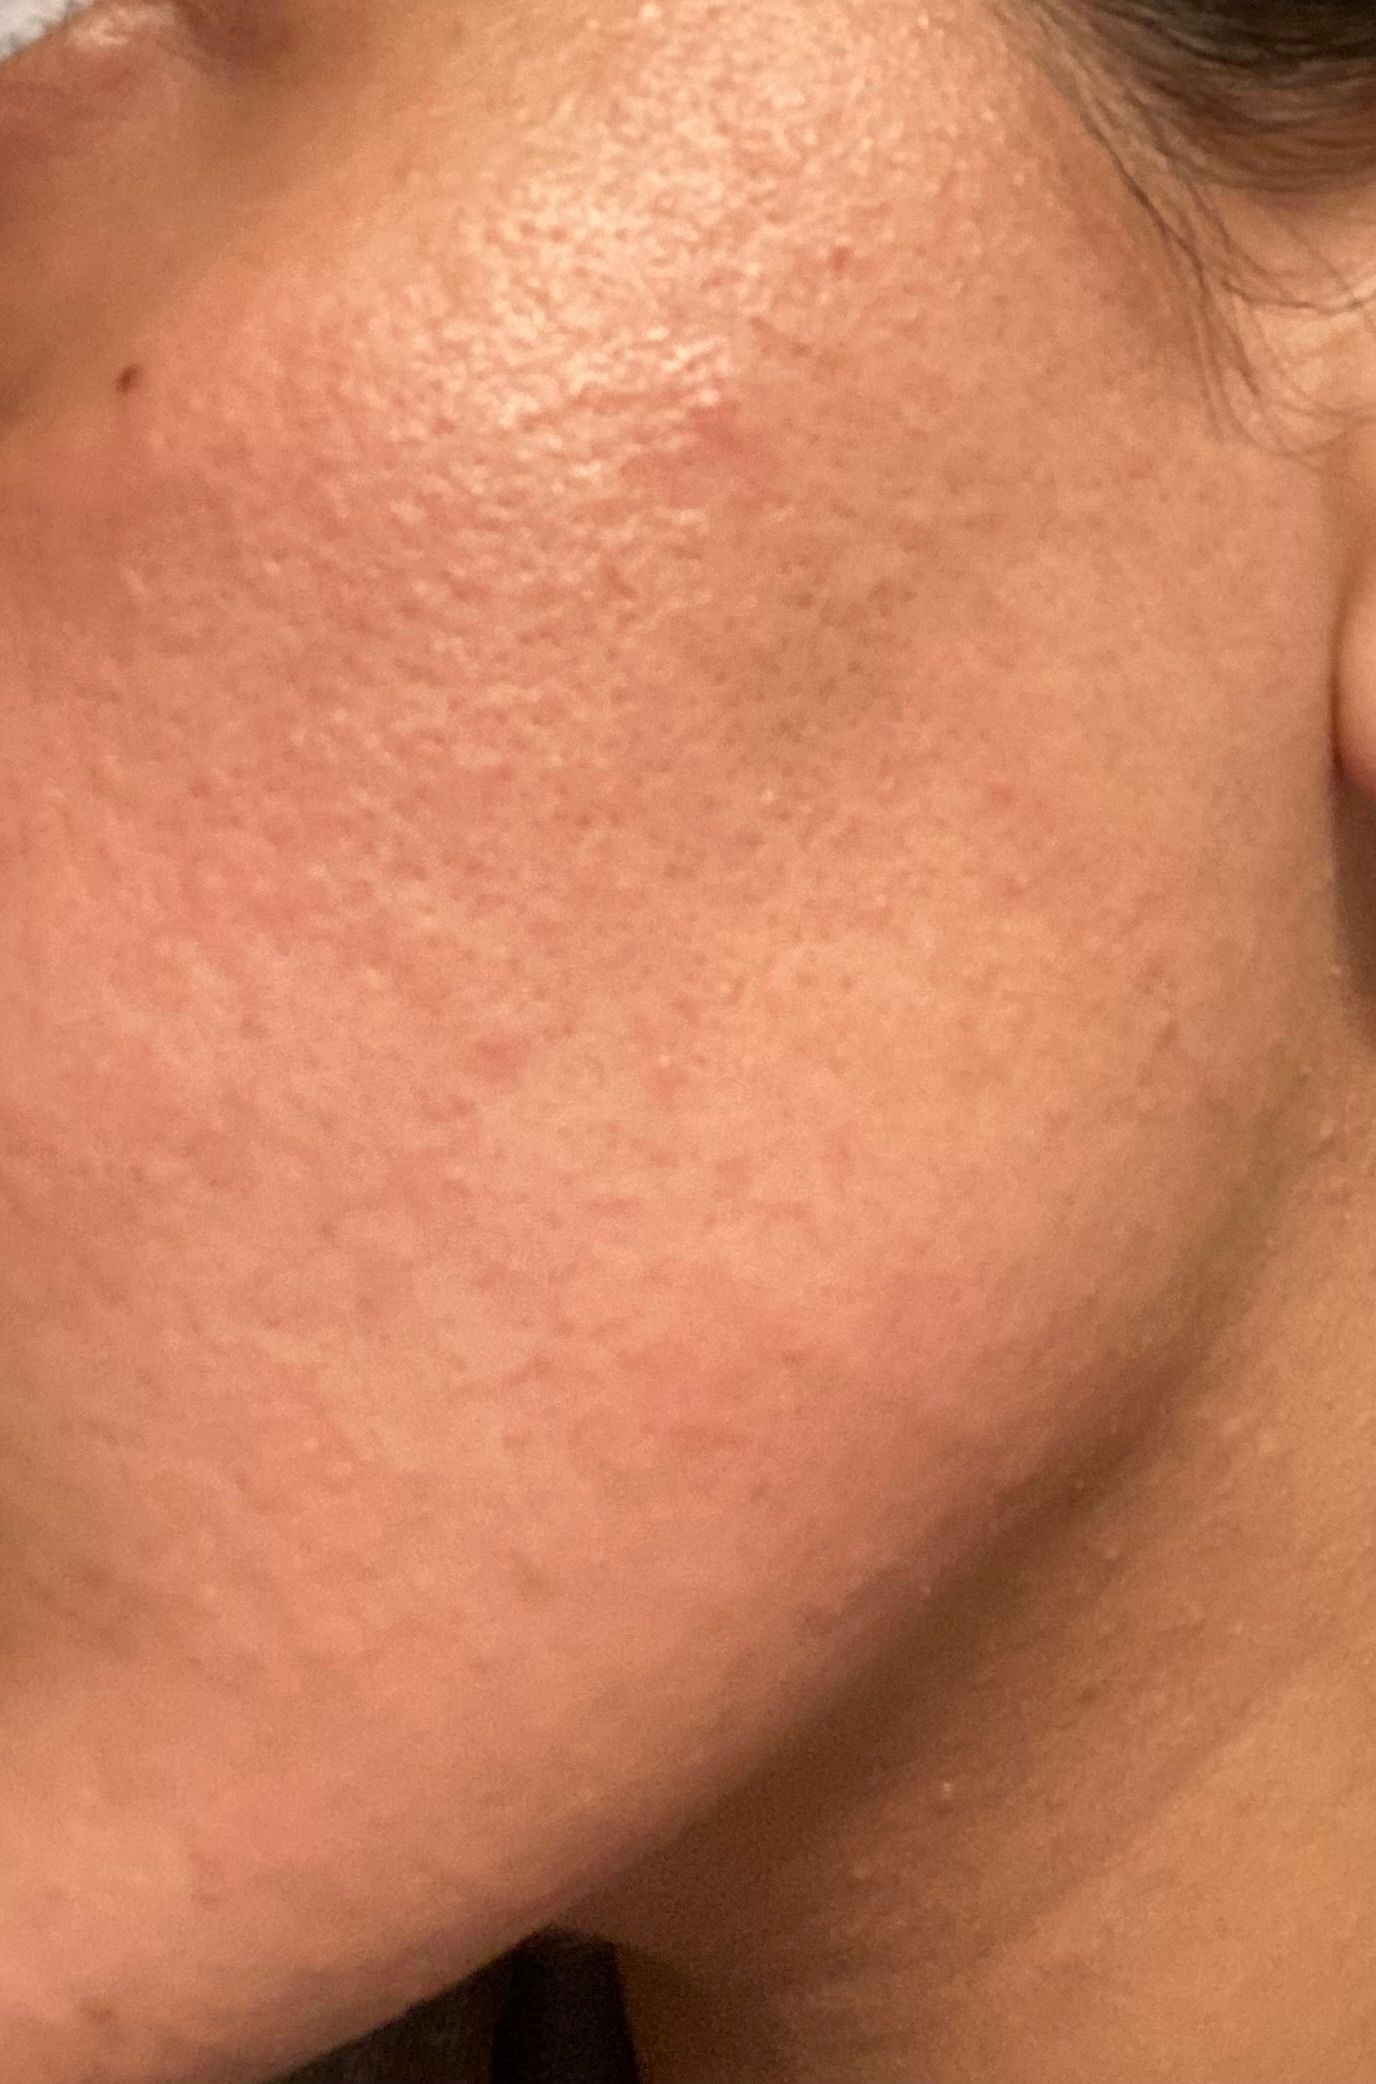 small rash like bumps on face - Beauty Insider Community